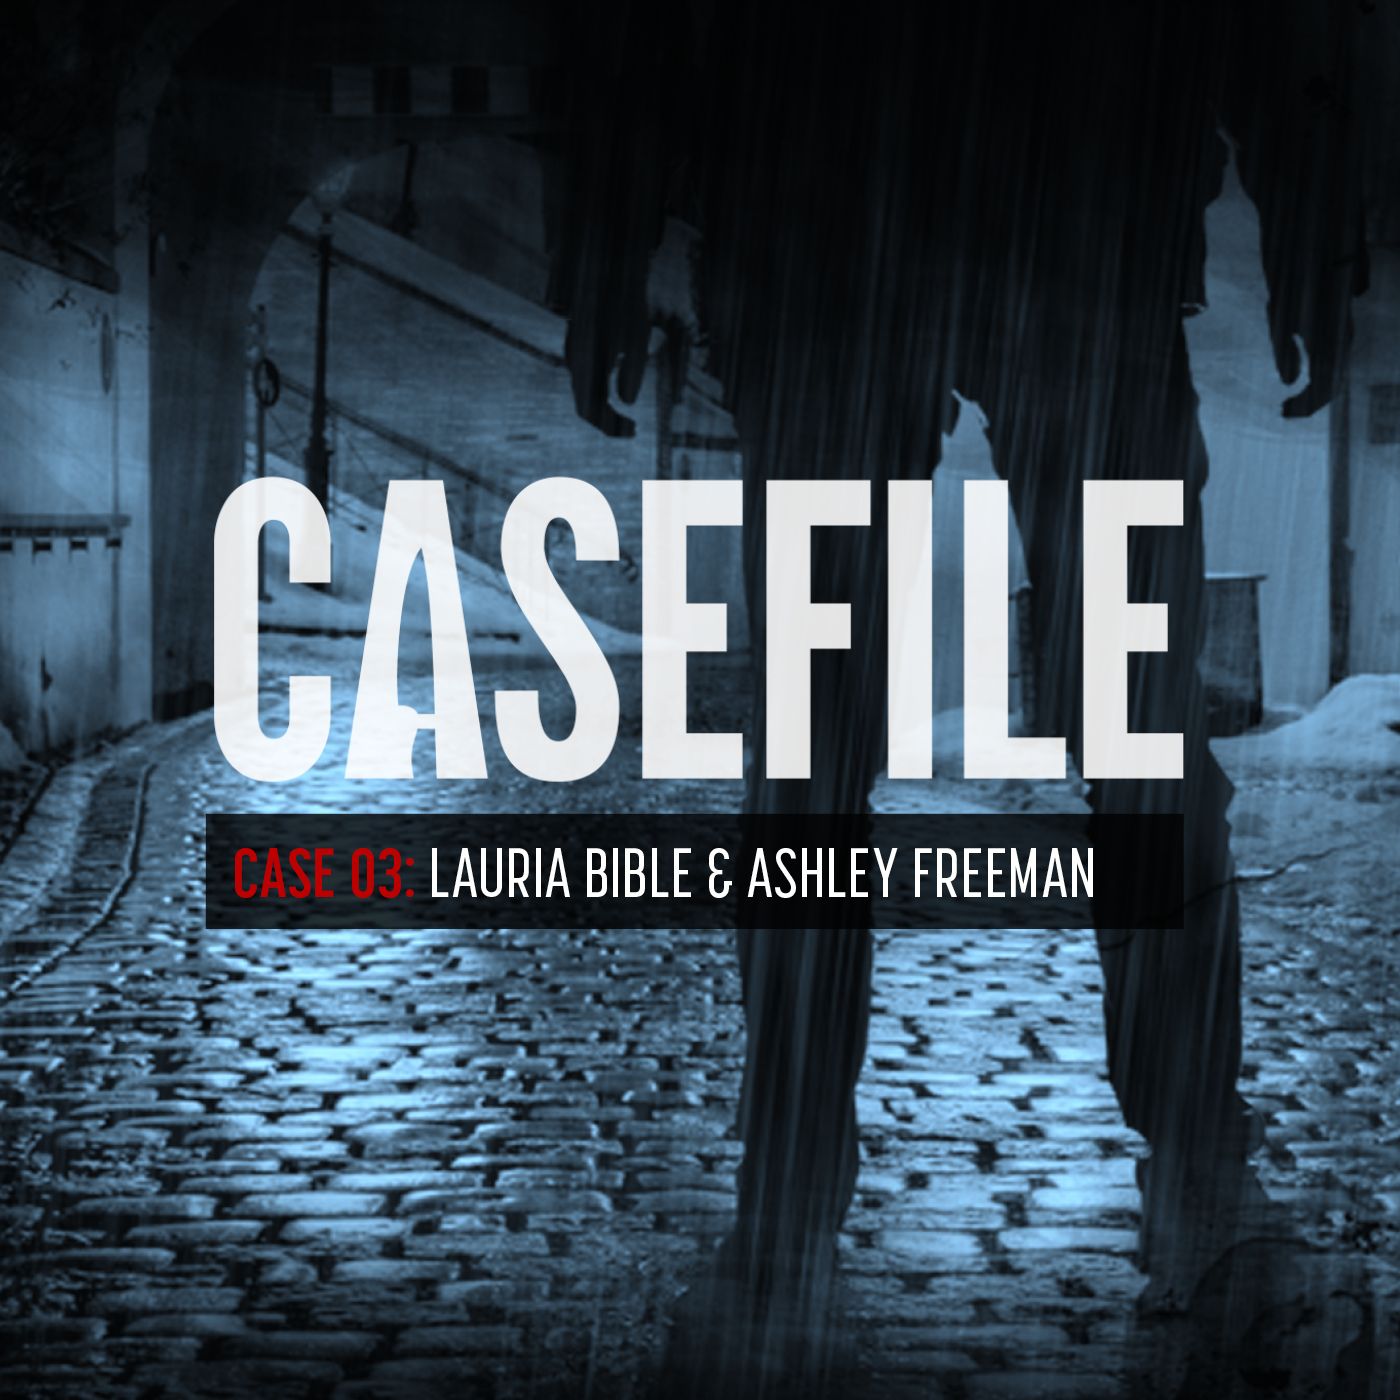 Case 03: Lauria Bible & Ashley Freeman